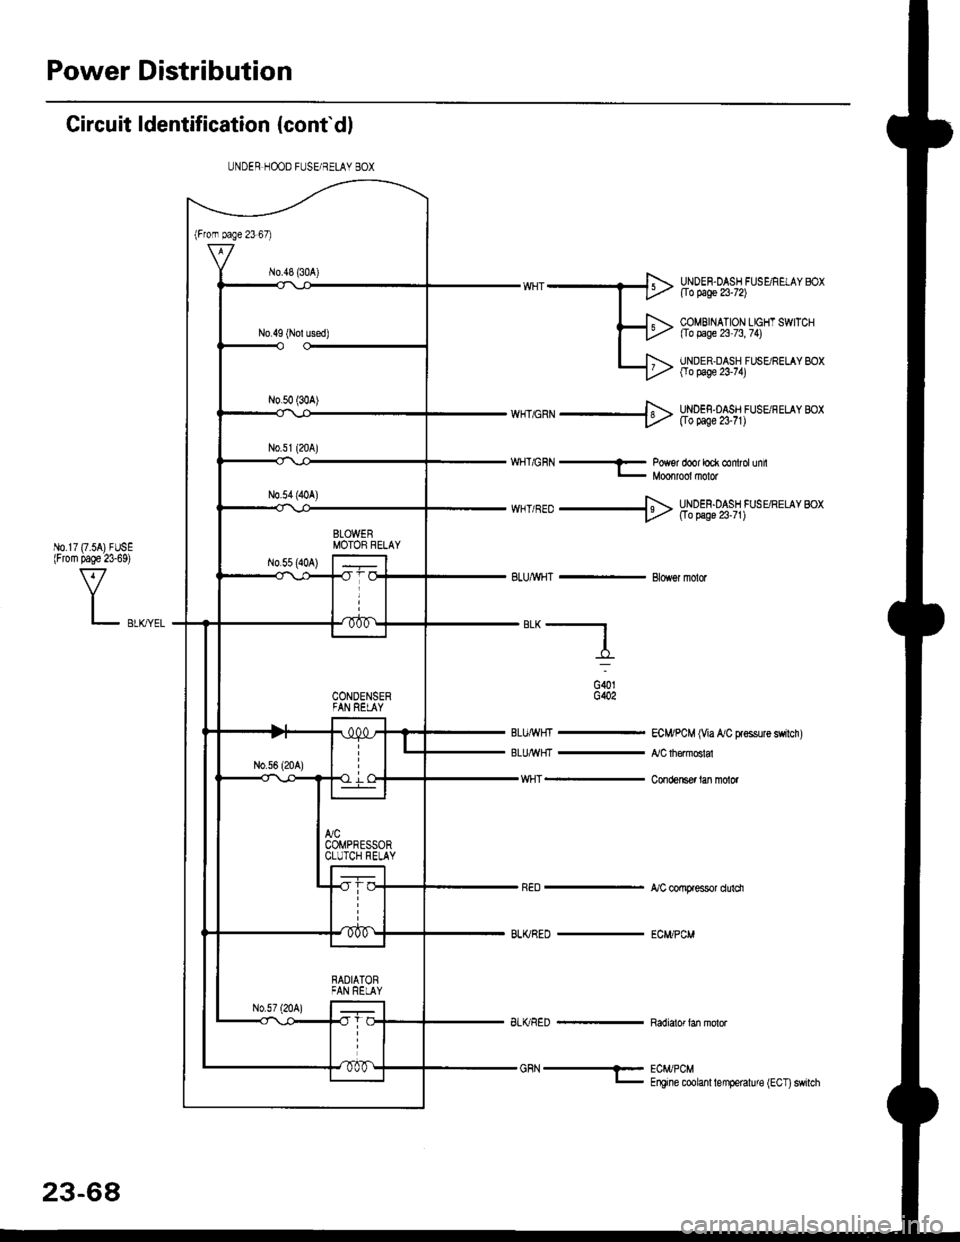 HONDA CIVIC 1997 6.G Owners Manual Power Distribution
Circuit ldentification (conf dl
ECI4/PCM (Via A/C Fsssure switch)
,VC th€modA
Con(,ensef lan molor
A/C comFessor dulci
ECWPCM
UNDER HOOD FUSE/BELAY BOX
"*-f_
v{HT -
BLI(/RED -
UND